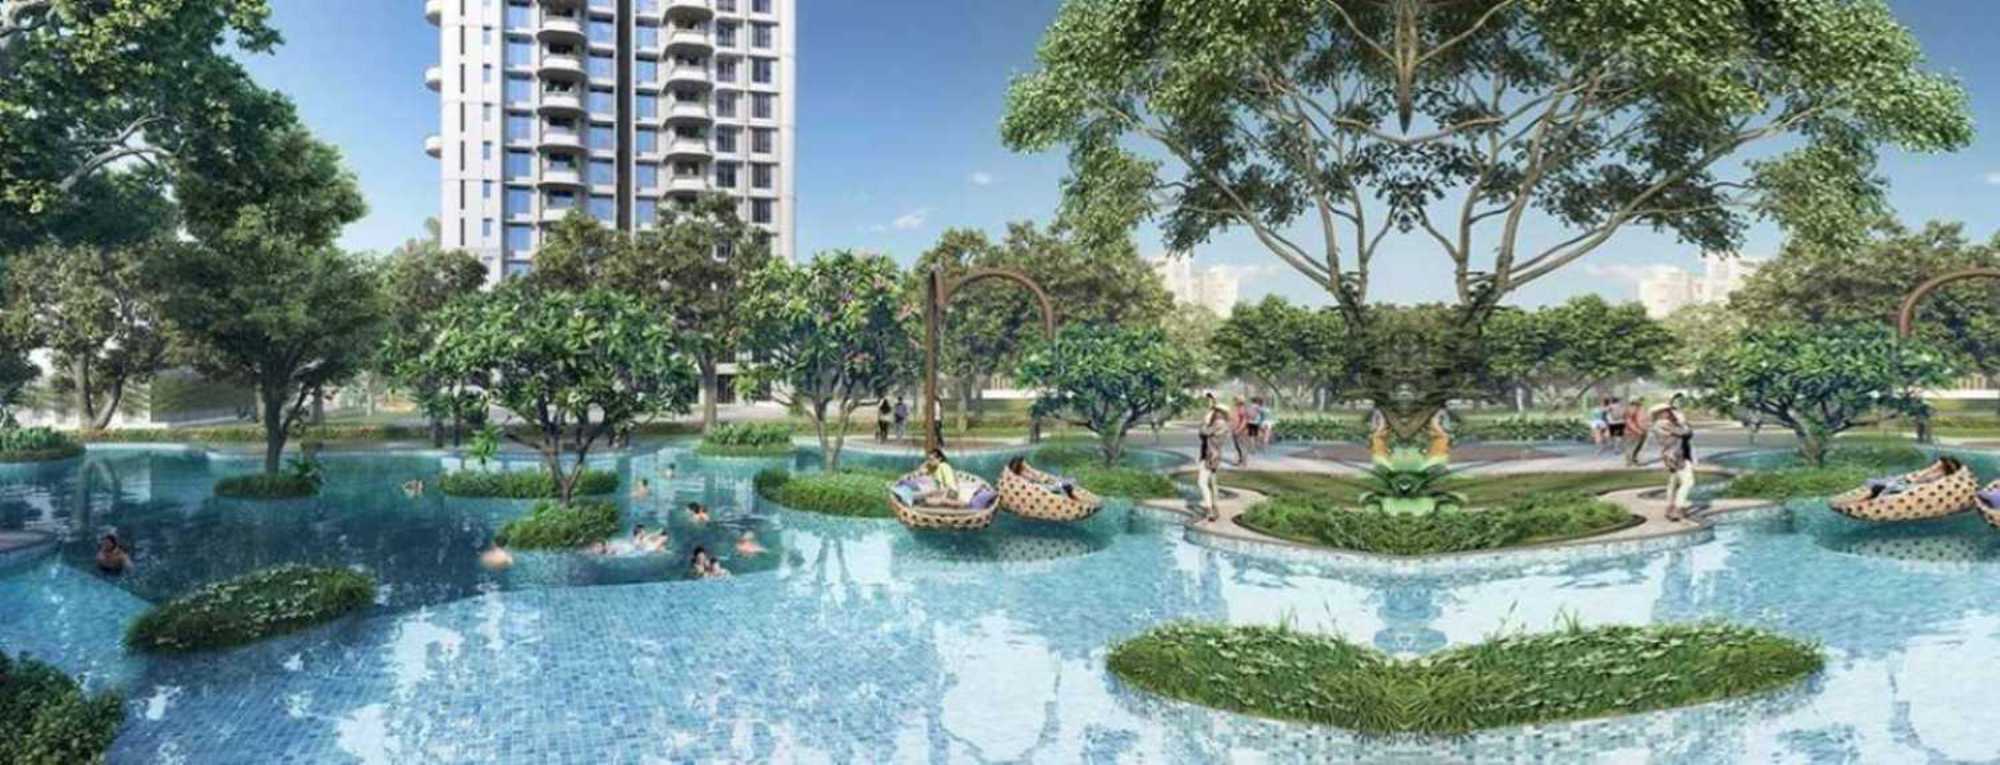 Lodha Group soon coming up with its new residential development at Jogeshwari Mumbai